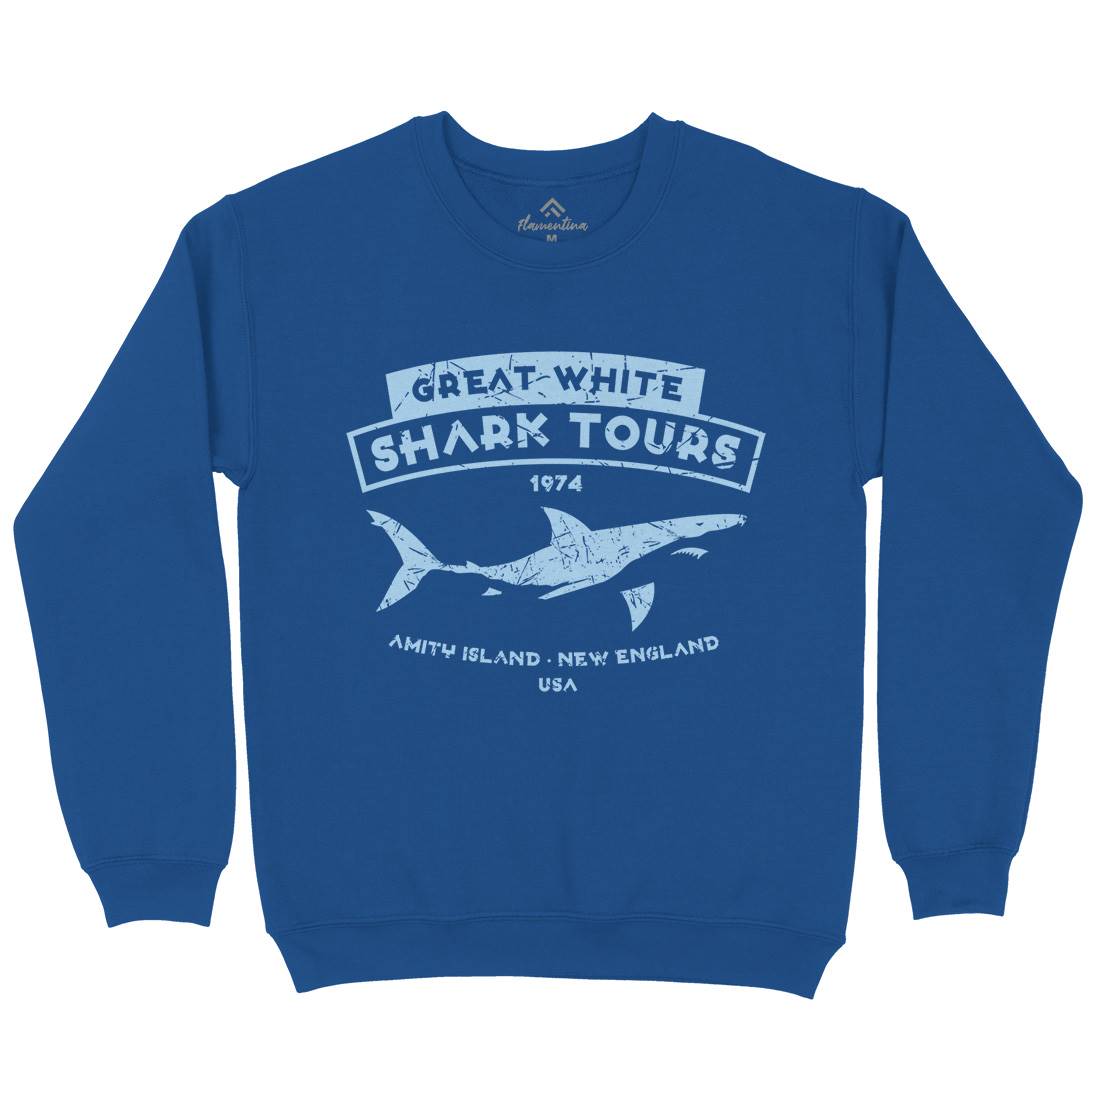 Great White Shark Tours Kids Crew Neck Sweatshirt Navy D348